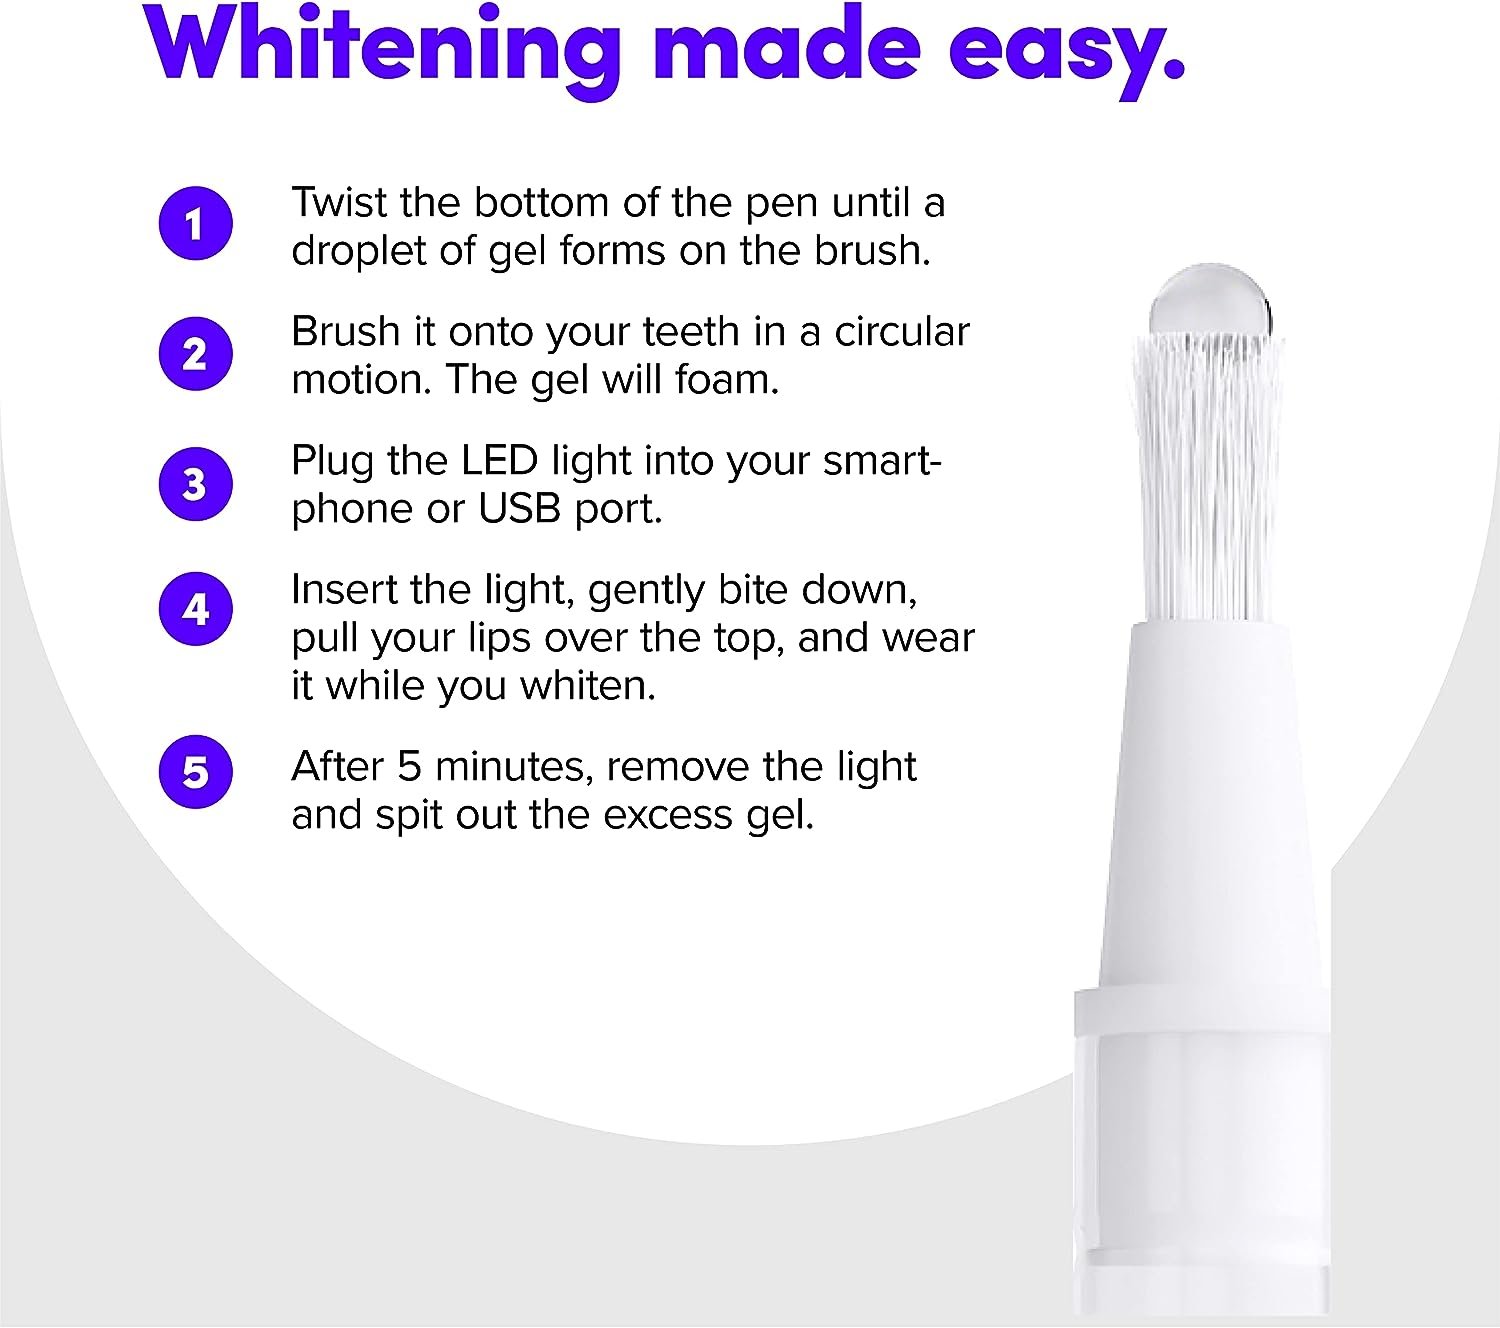 SmileDirectClub Teeth Whitening Kit with LED Light - 4 Pack Gel Pens - Professional Strength Hydrogen Peroxide